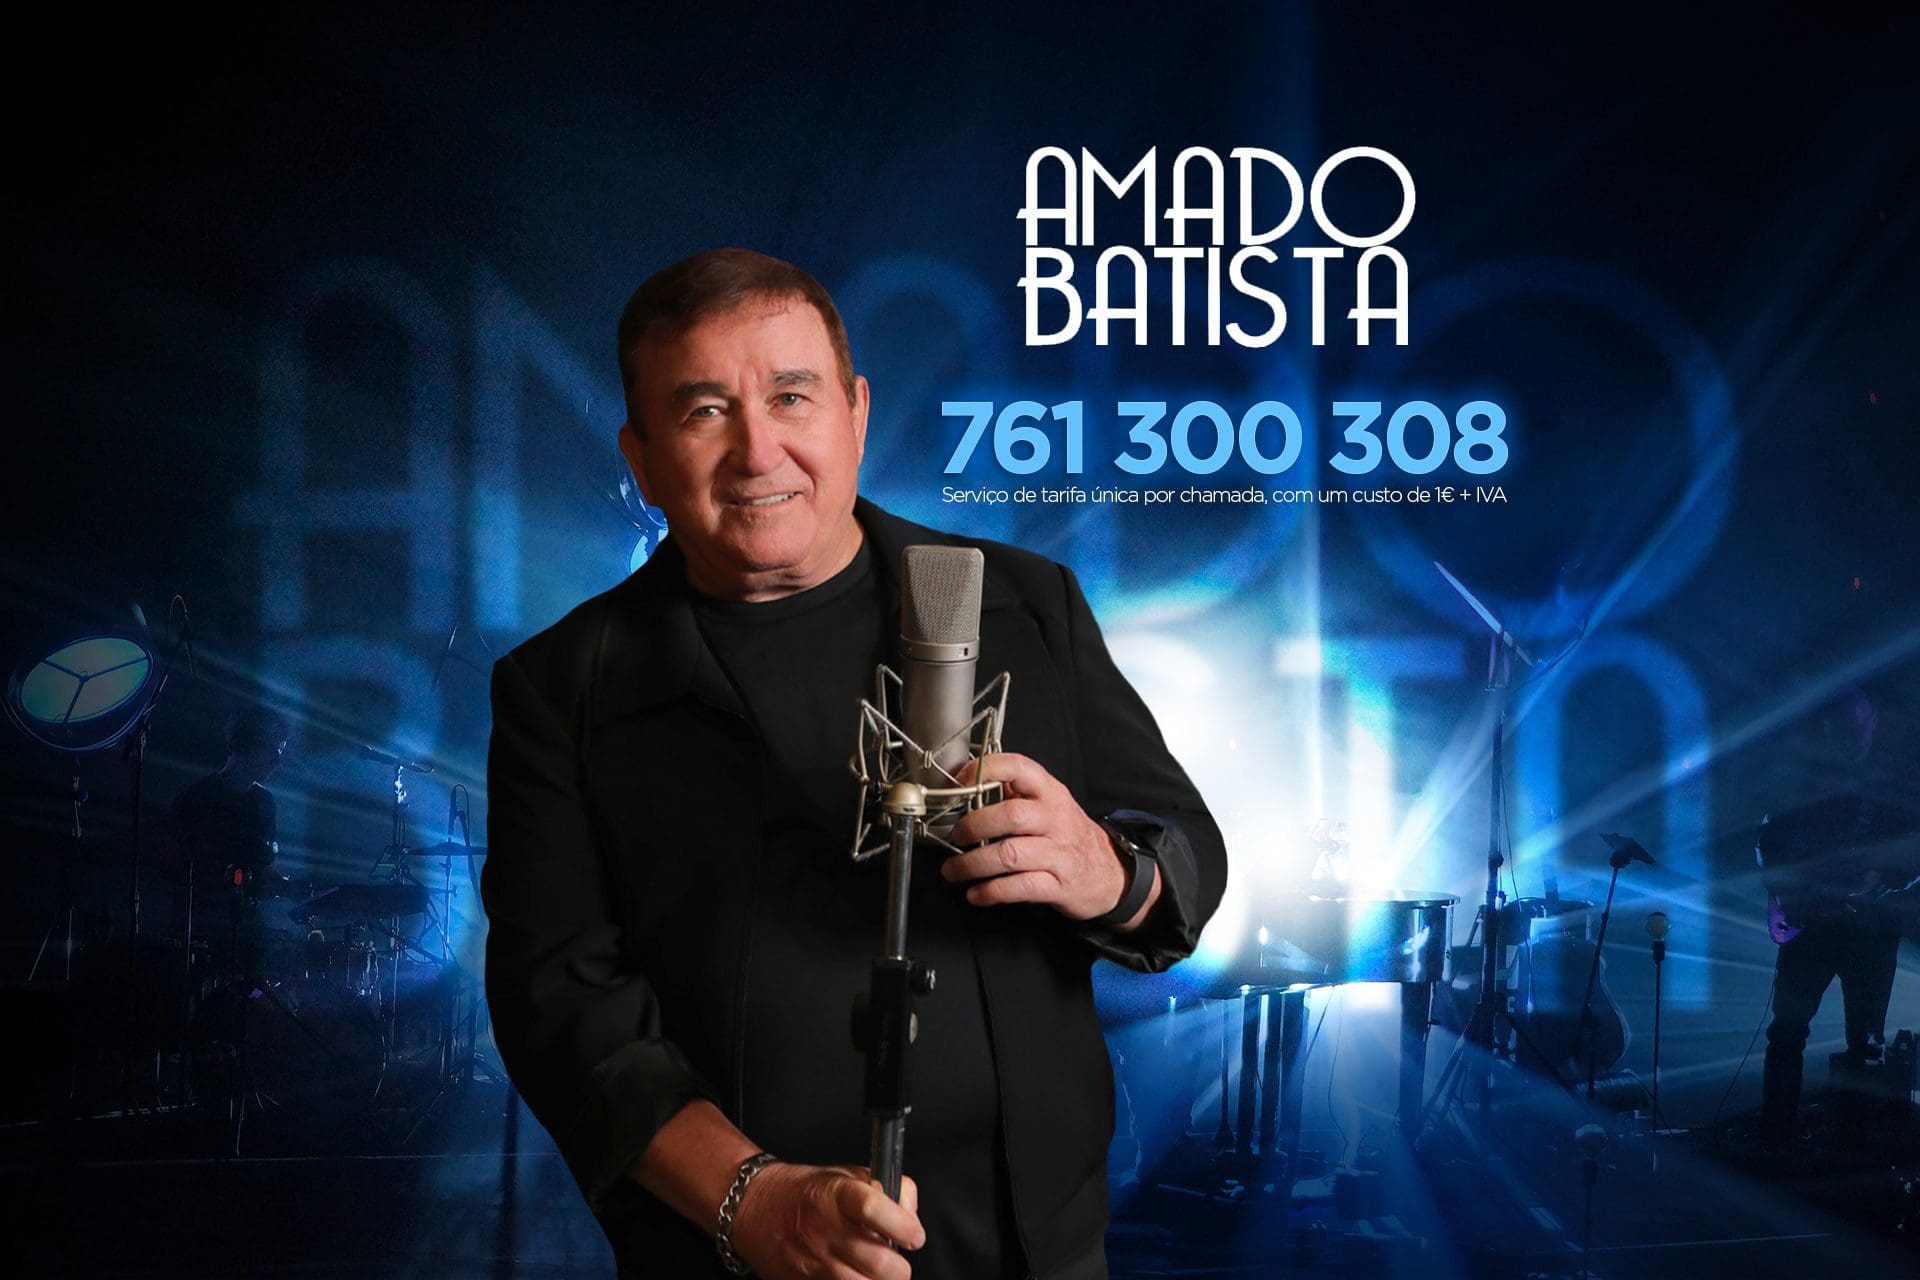 Vá ao concerto de Amado Batista com a Record TV Europa